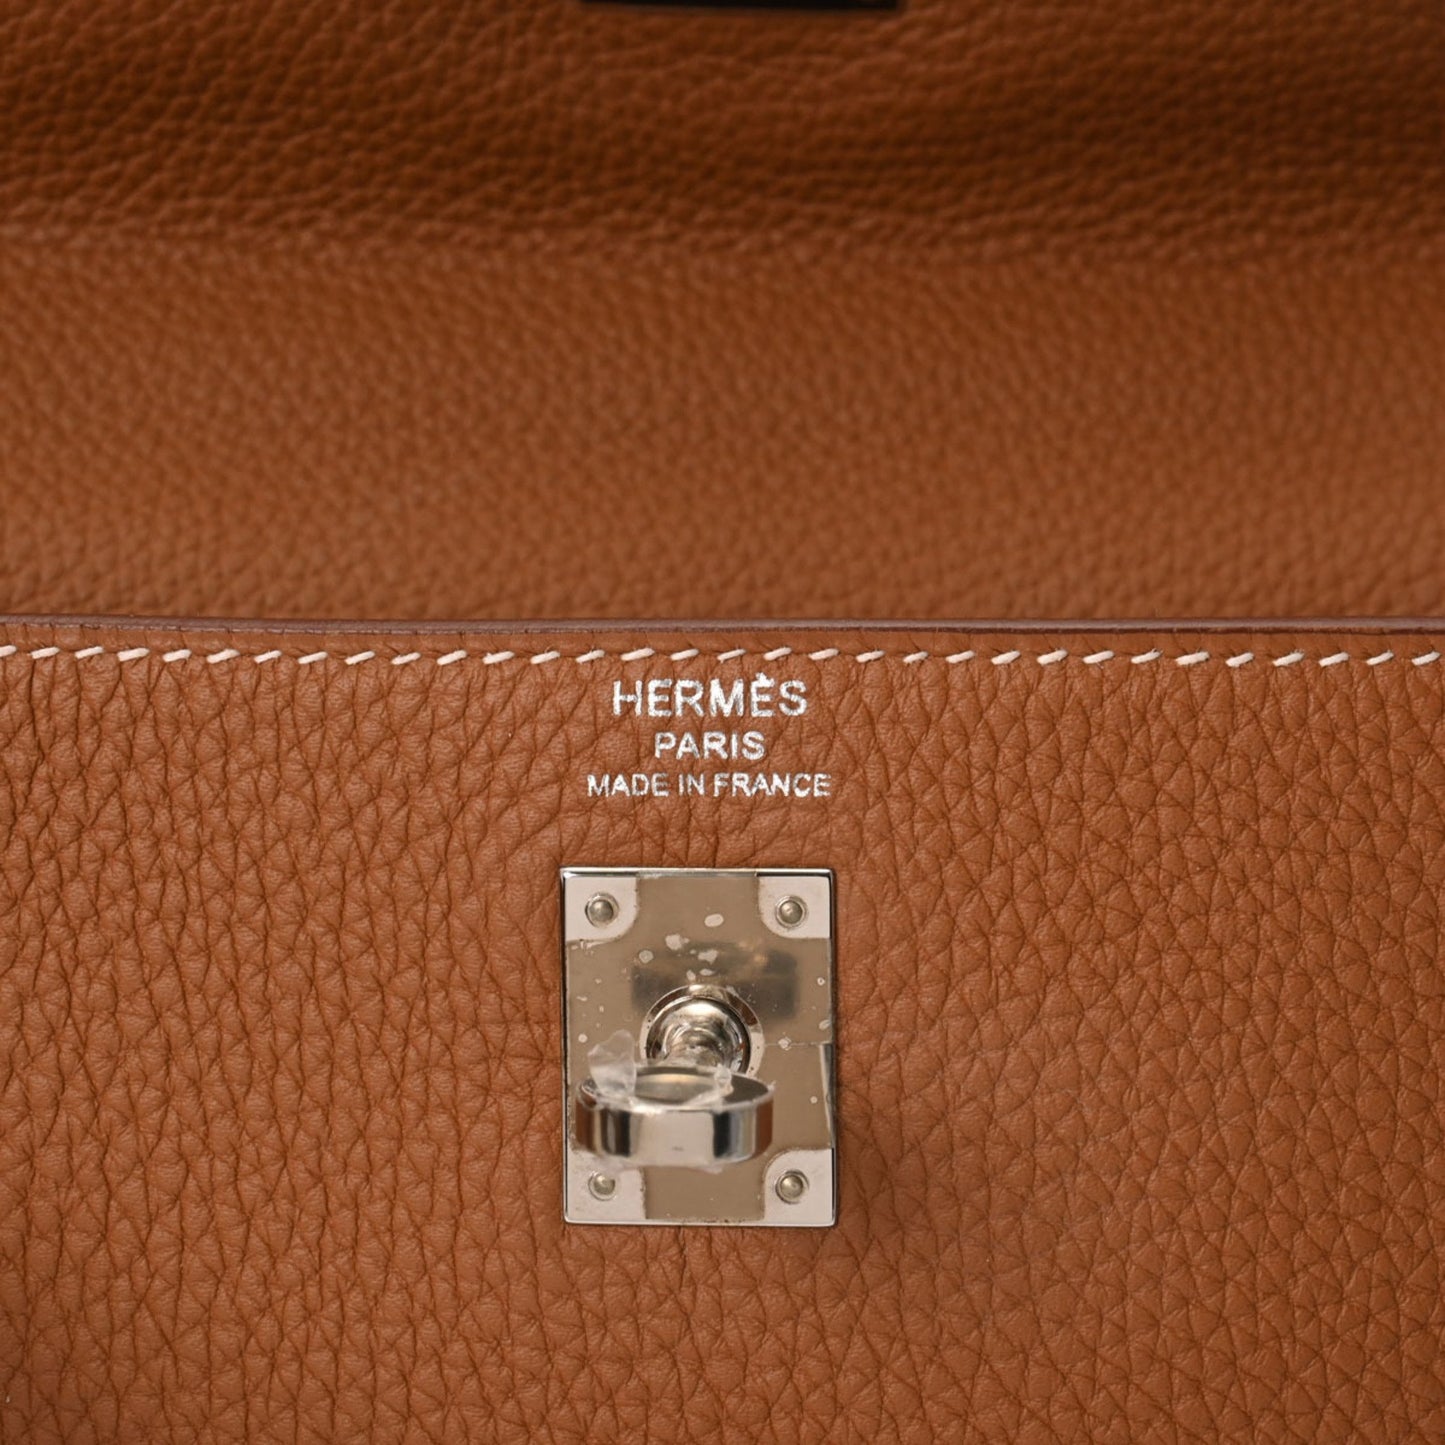 Hermes Women's Golden Leather Handbag with Clochette and Dust Bag in Gold